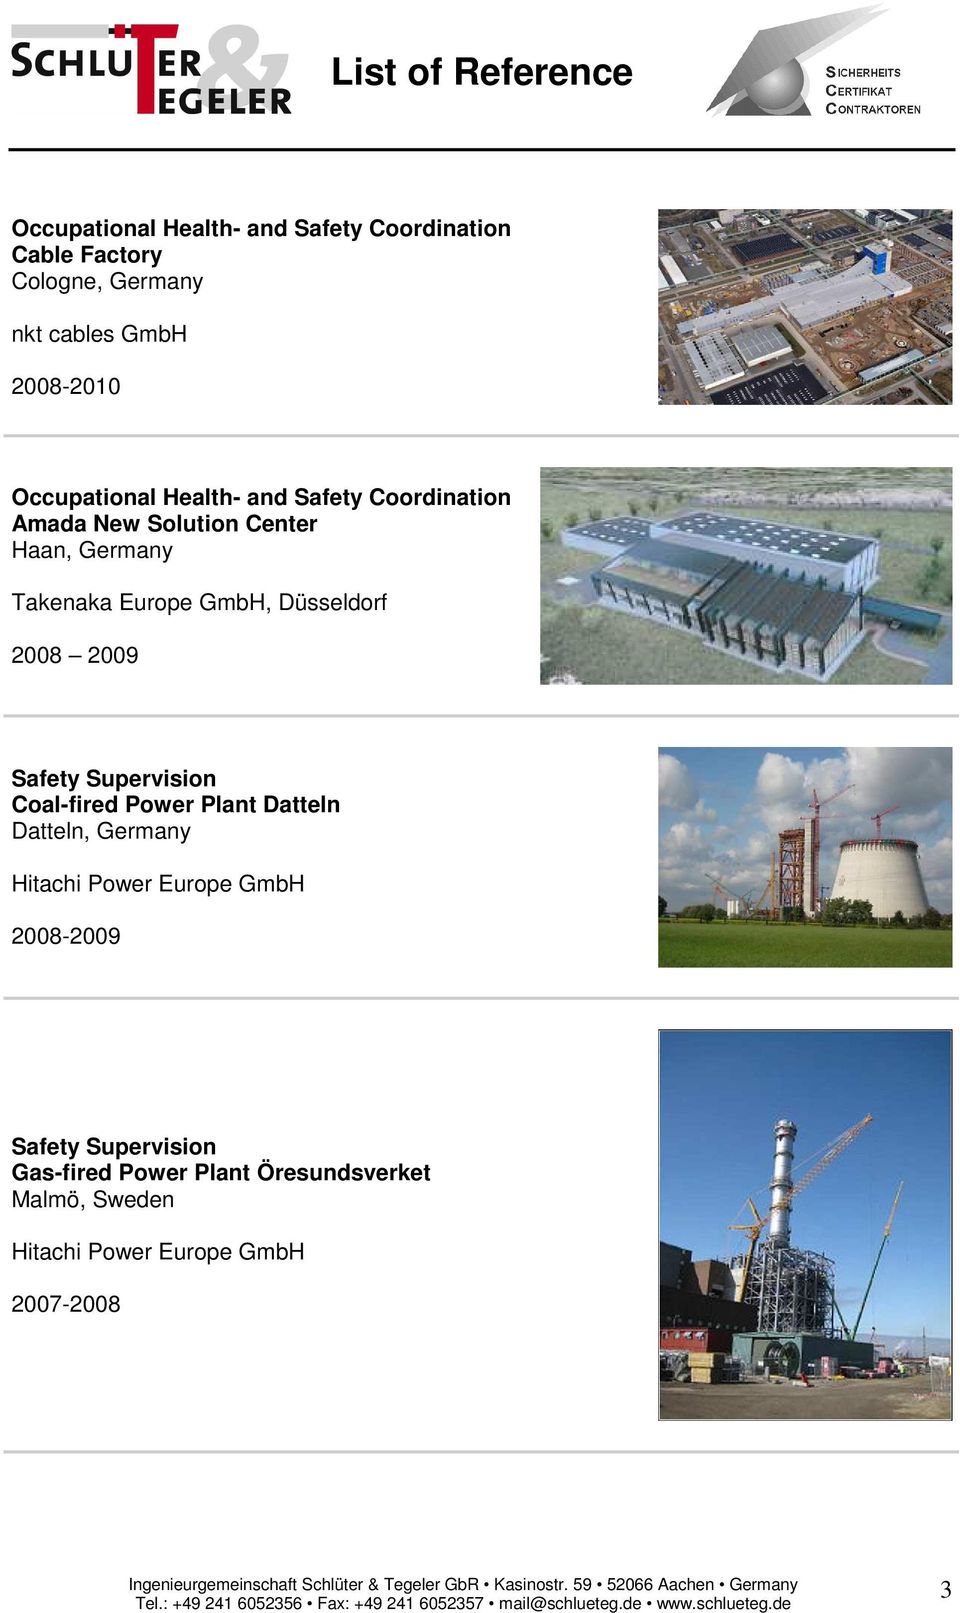 Plant Datteln Datteln, Hitachi Power Europe GmbH 2008-2009 Safety Supervision